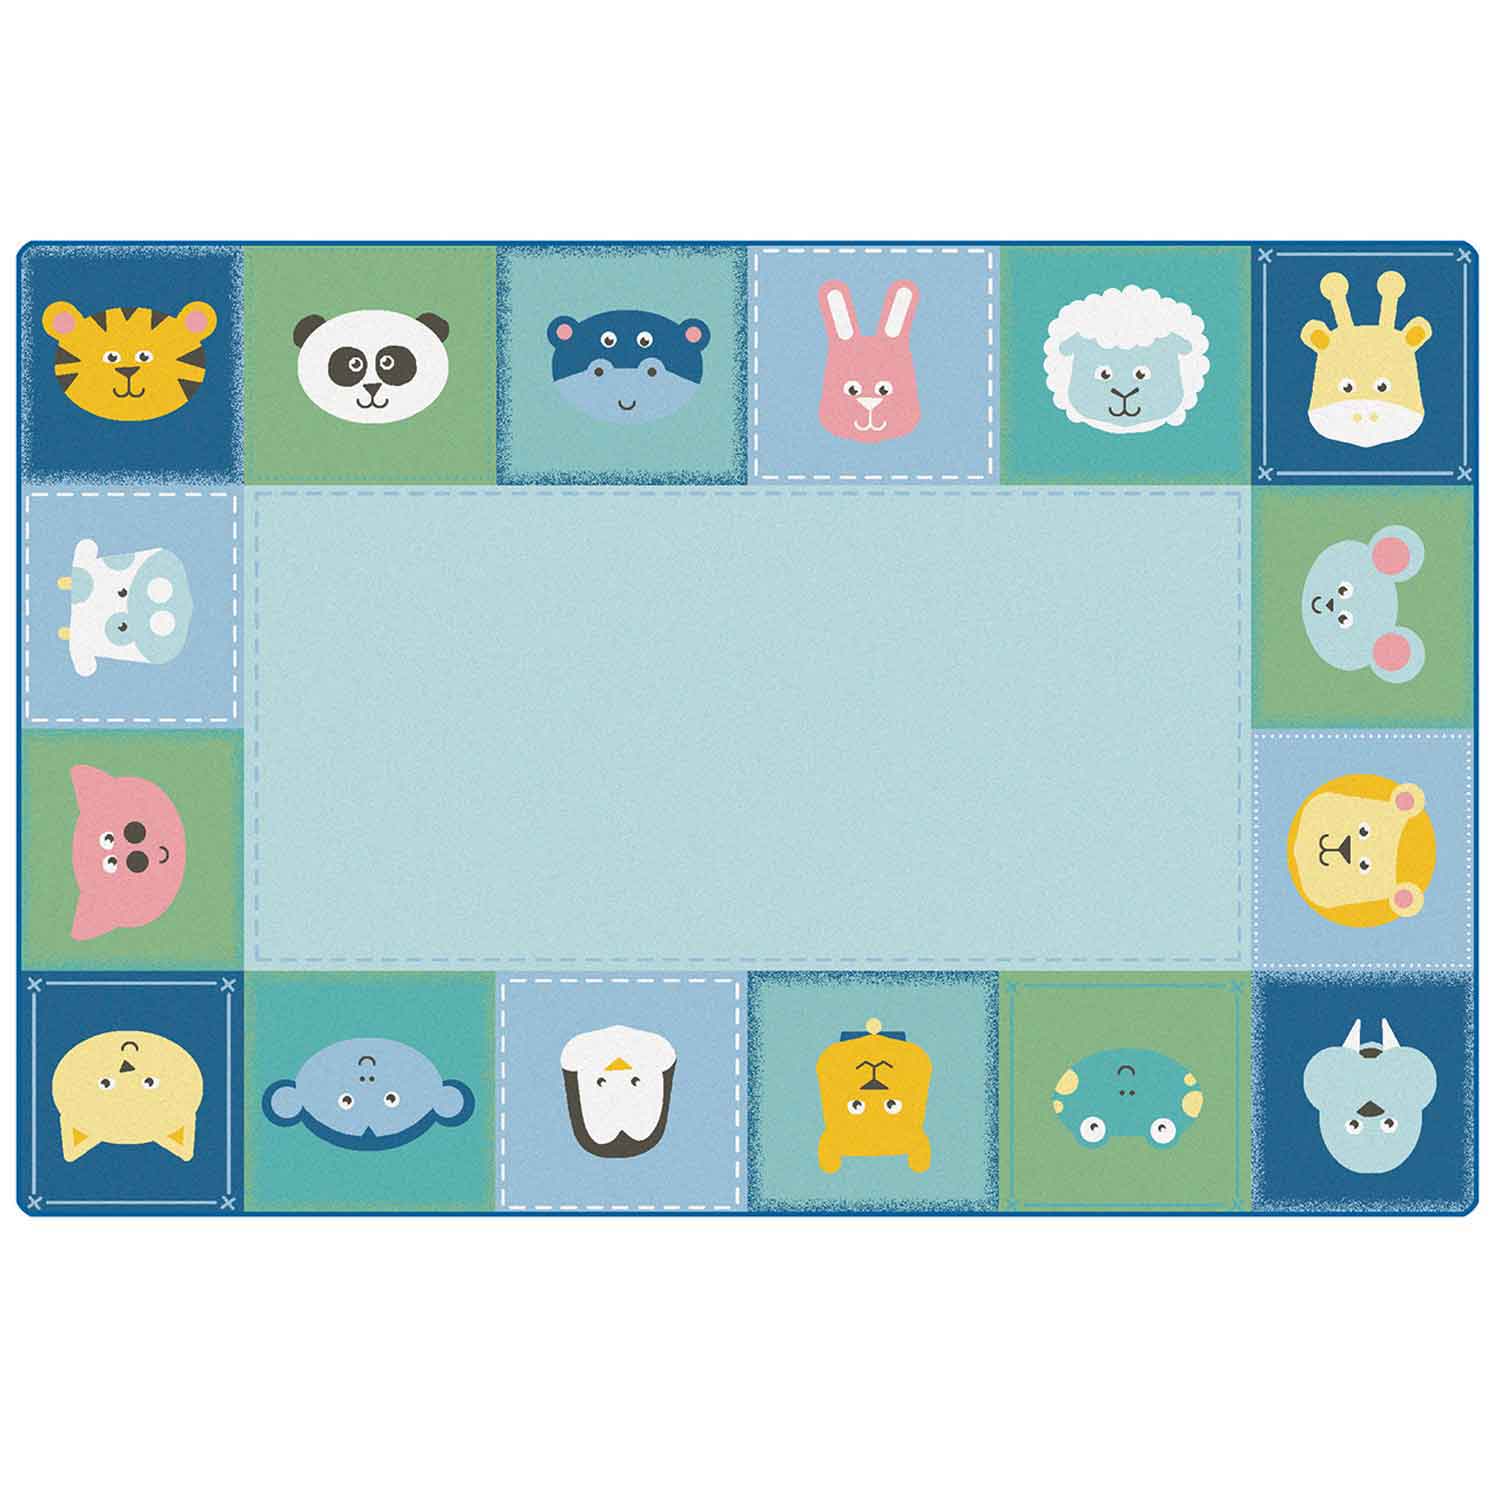 KIDSoft™ Baby Animals Border Rug, Rectangle 4' x 6'